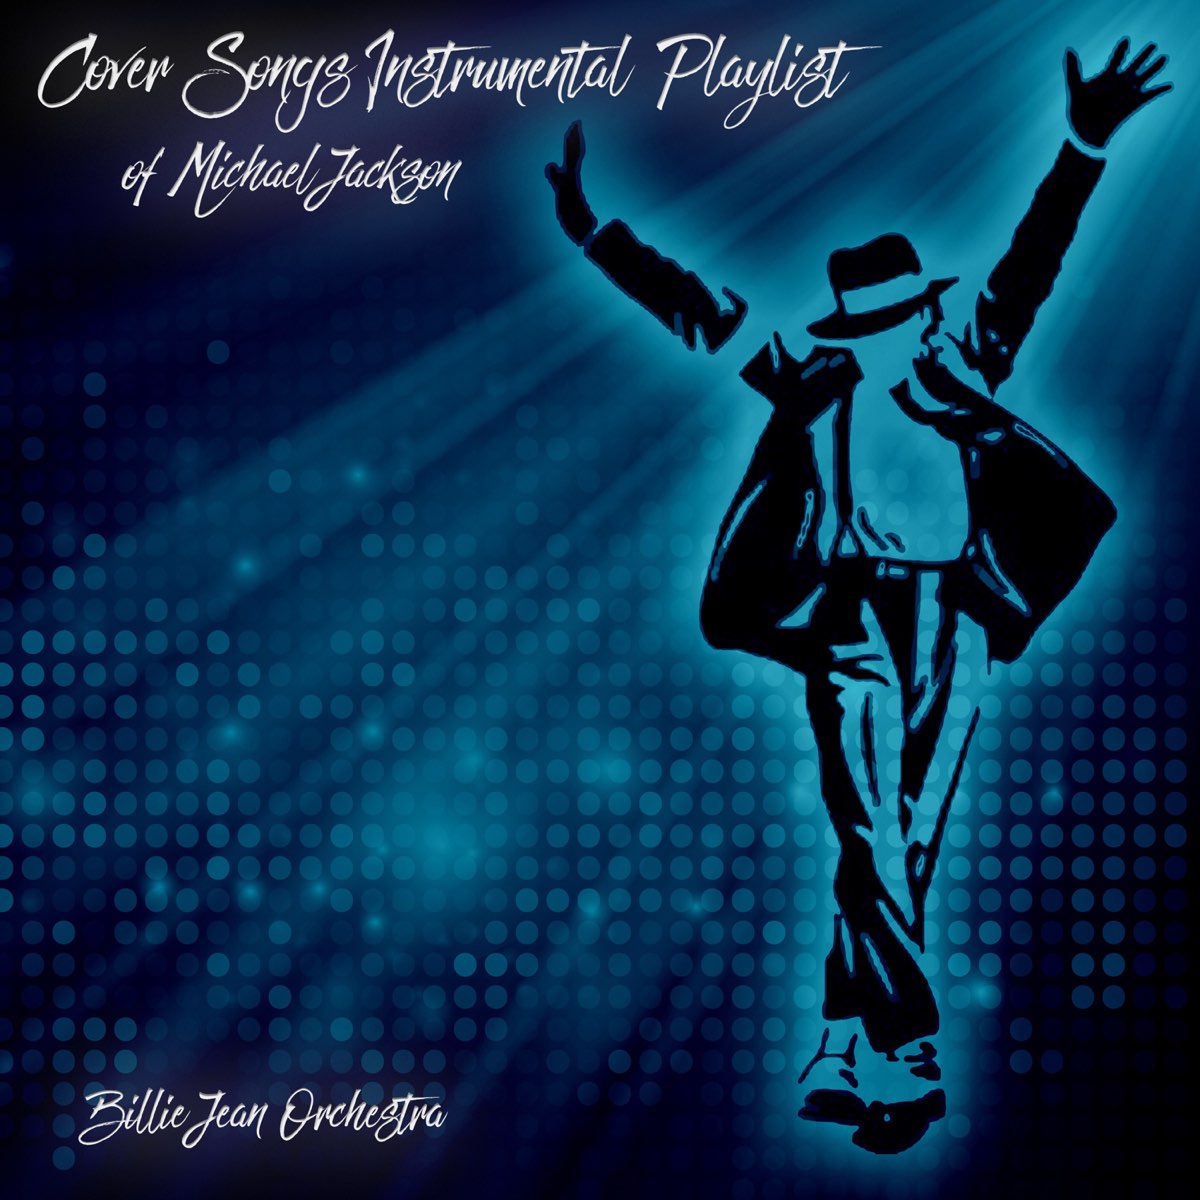 Guión Superior Desconexión Cover Songs Instrumental Playlist of Michael Jackson by Billie Jean  Orchestra on Apple Music